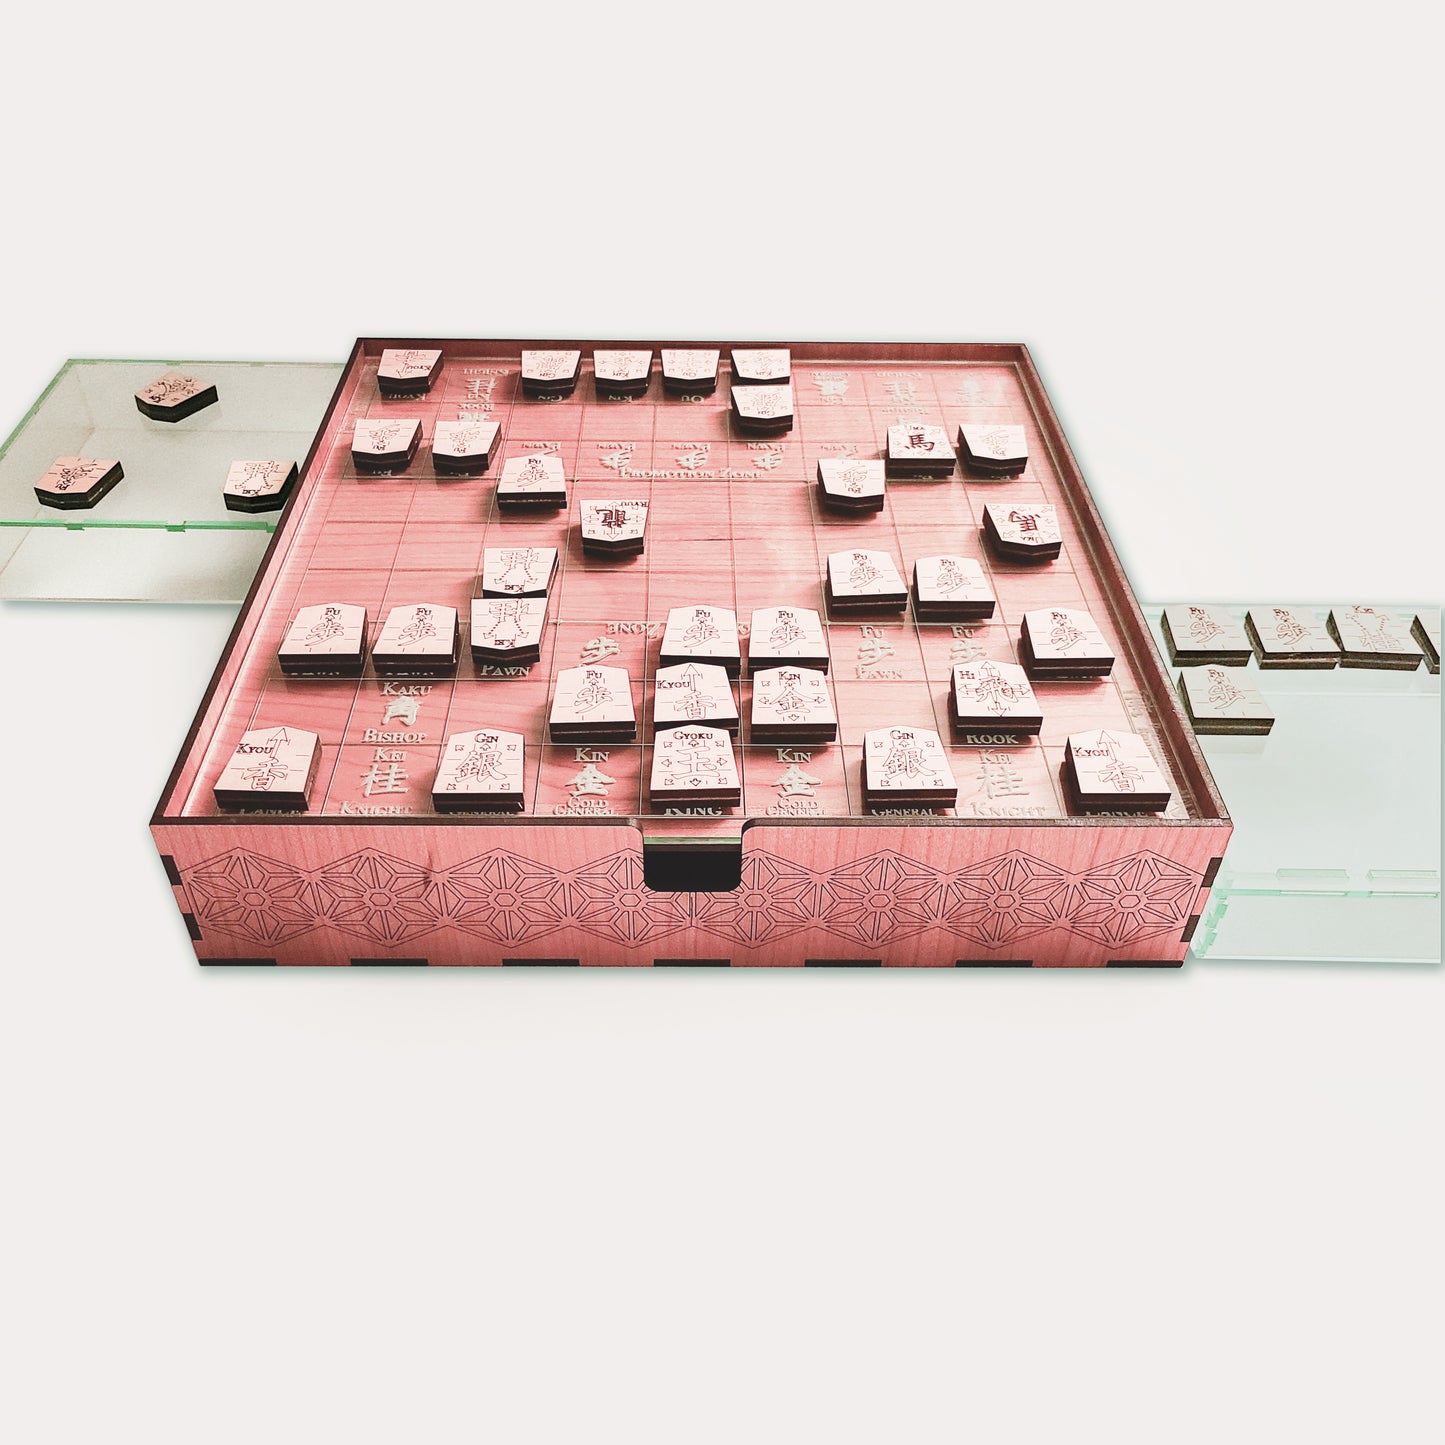 Japanese Chess Classical Shogi Game Set Traditional Board Travel Games しょうぎ  将棋